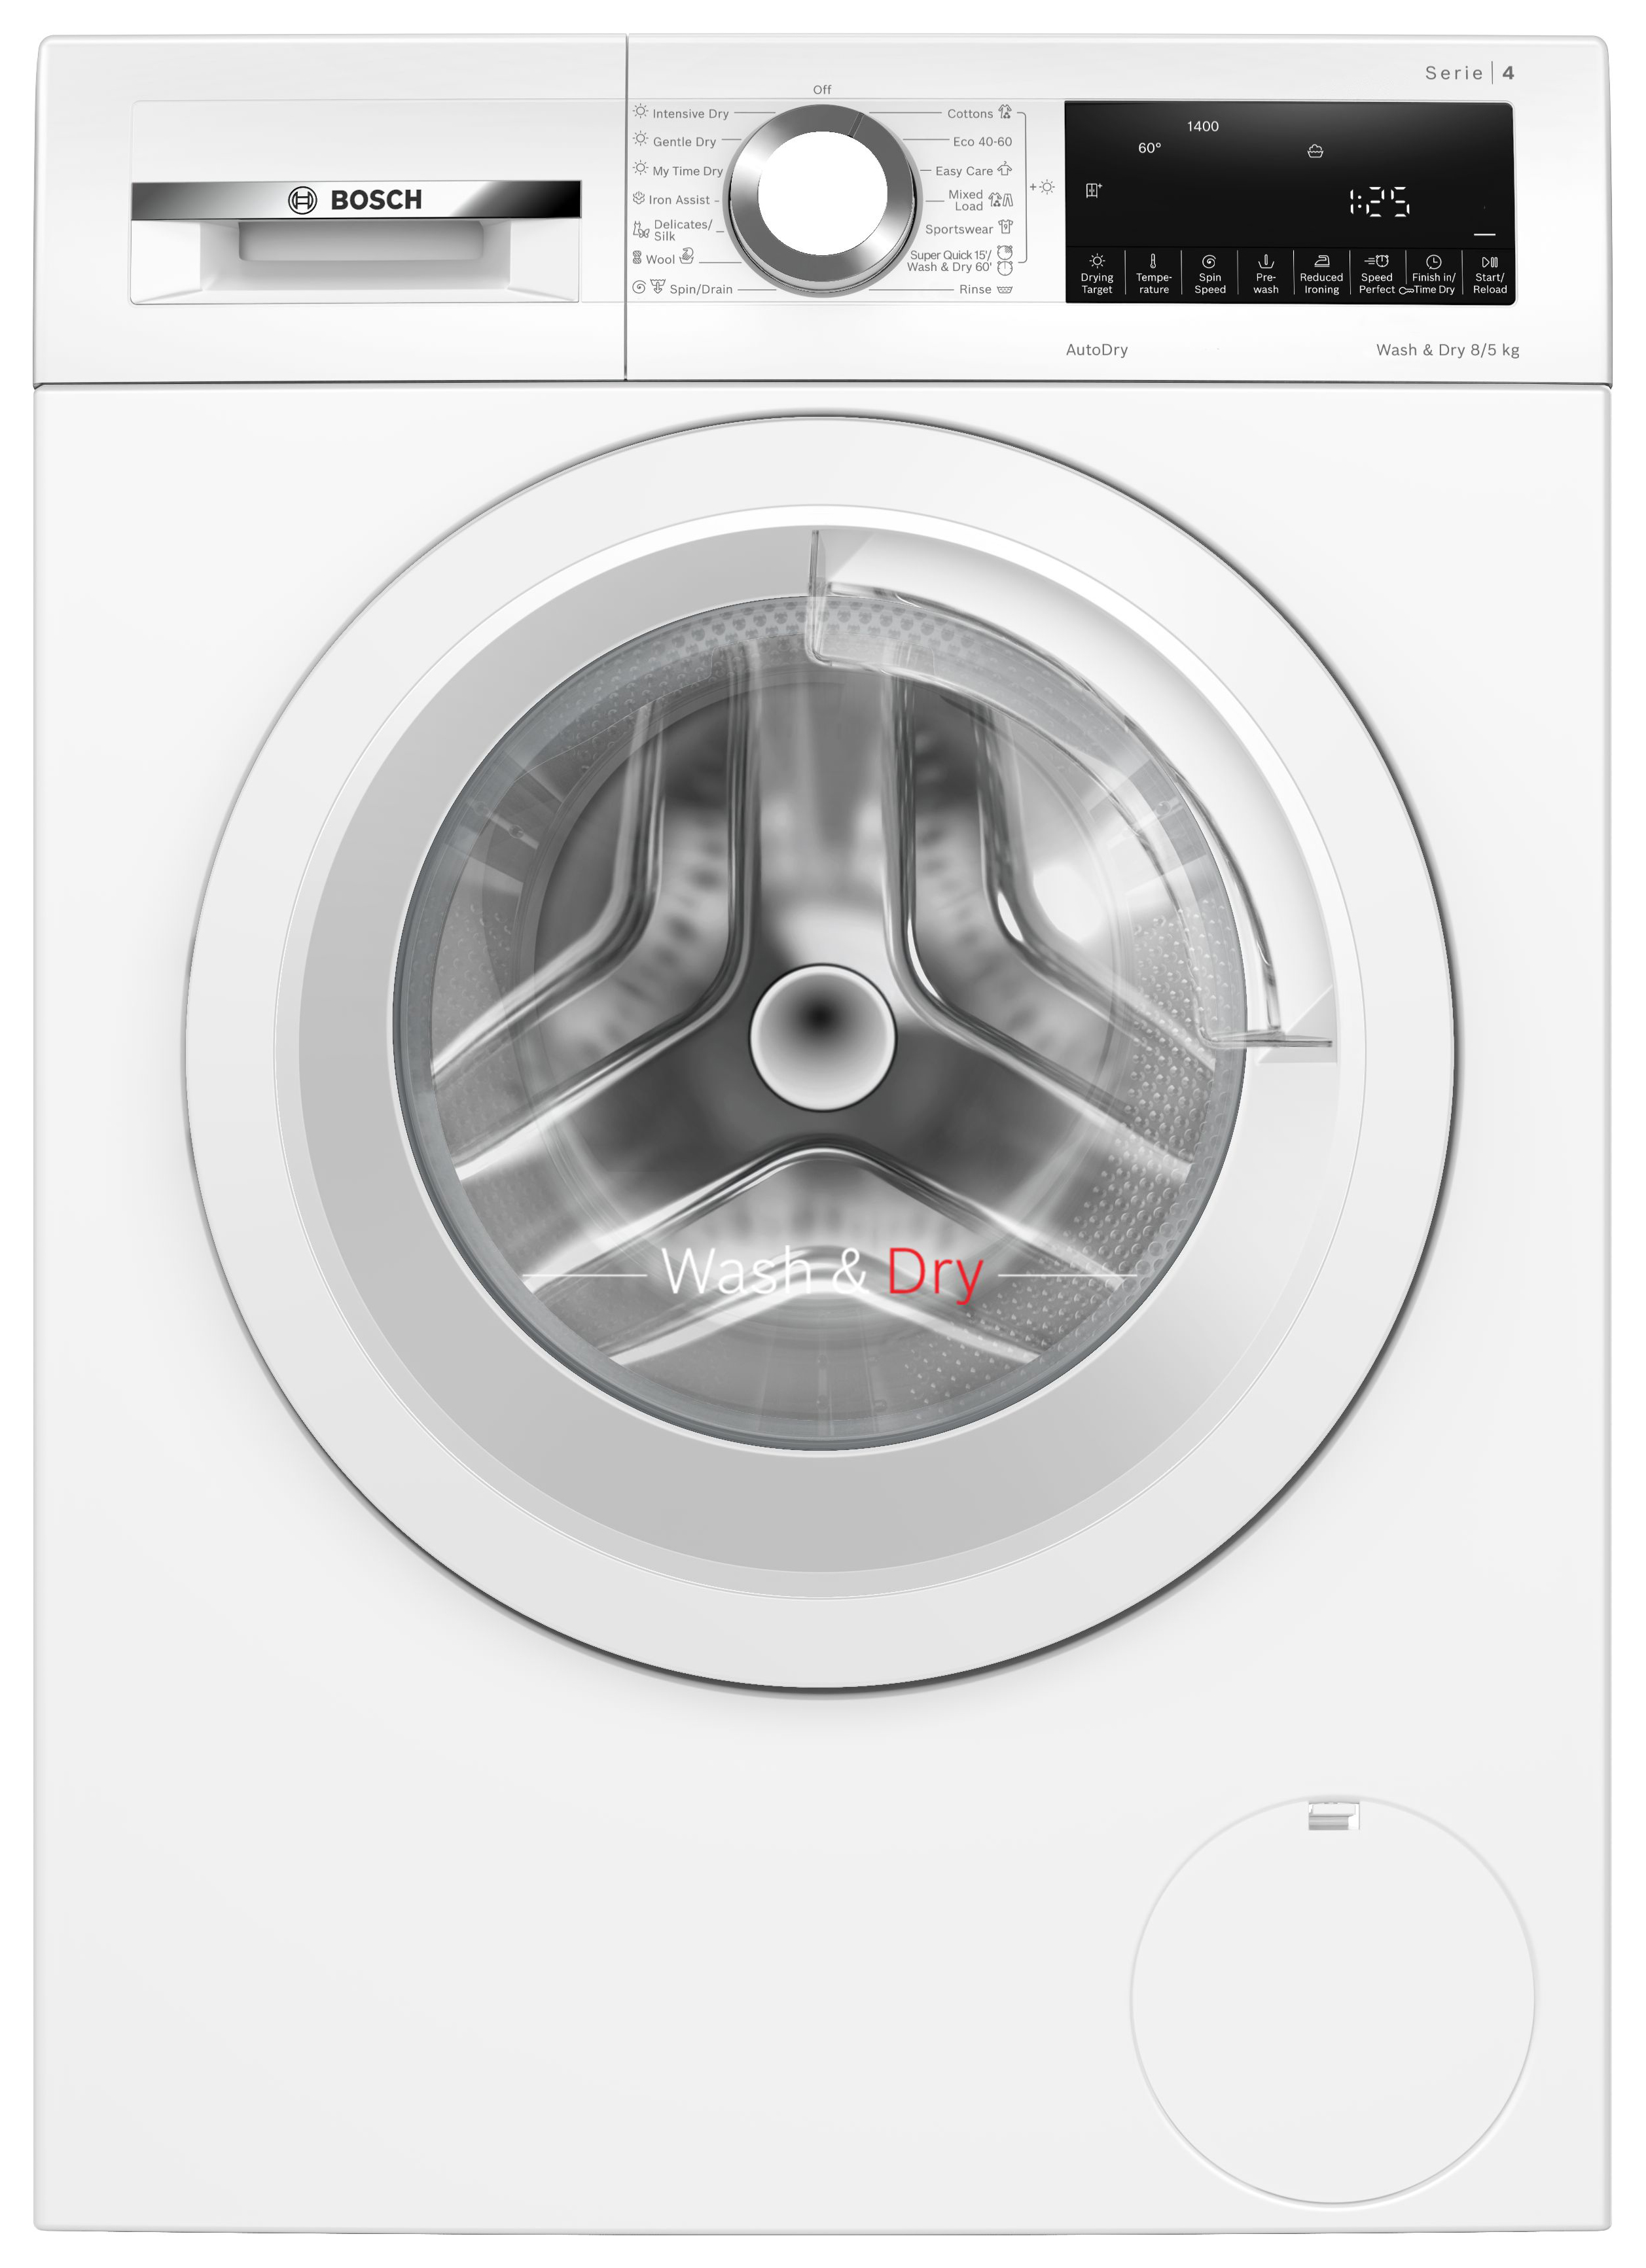 Bosch Series 4 WNA134U8GB 8kg / 5kg Washer Dryer - White